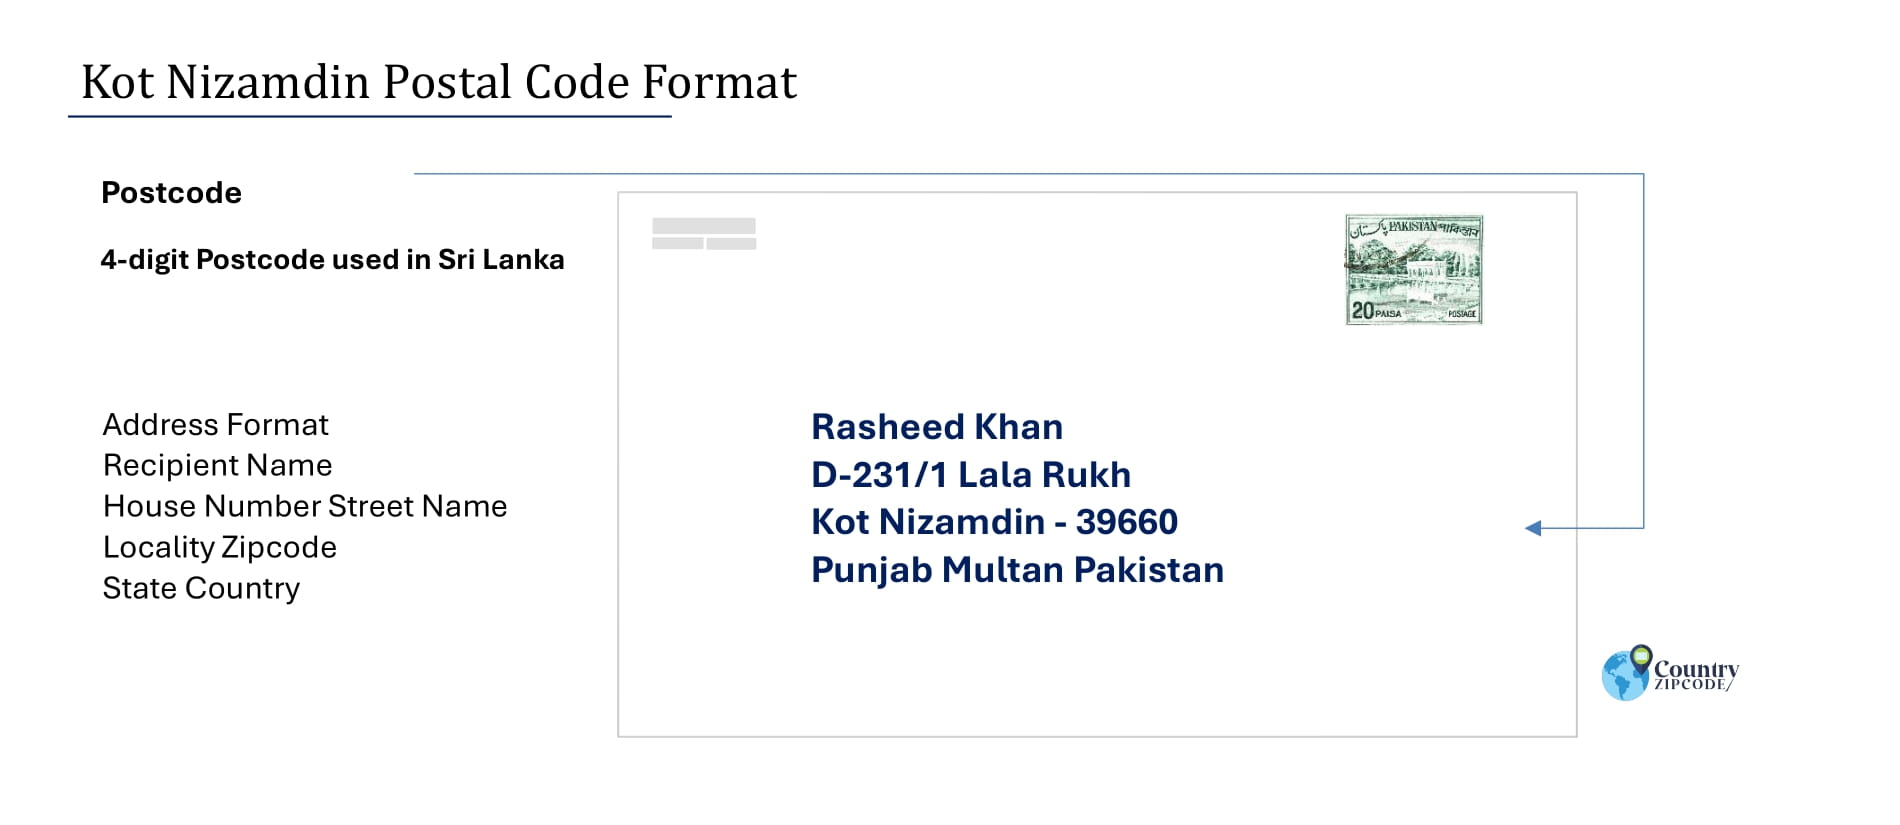 Example of Kot Nizamdin Pakistan Postal code and Address format